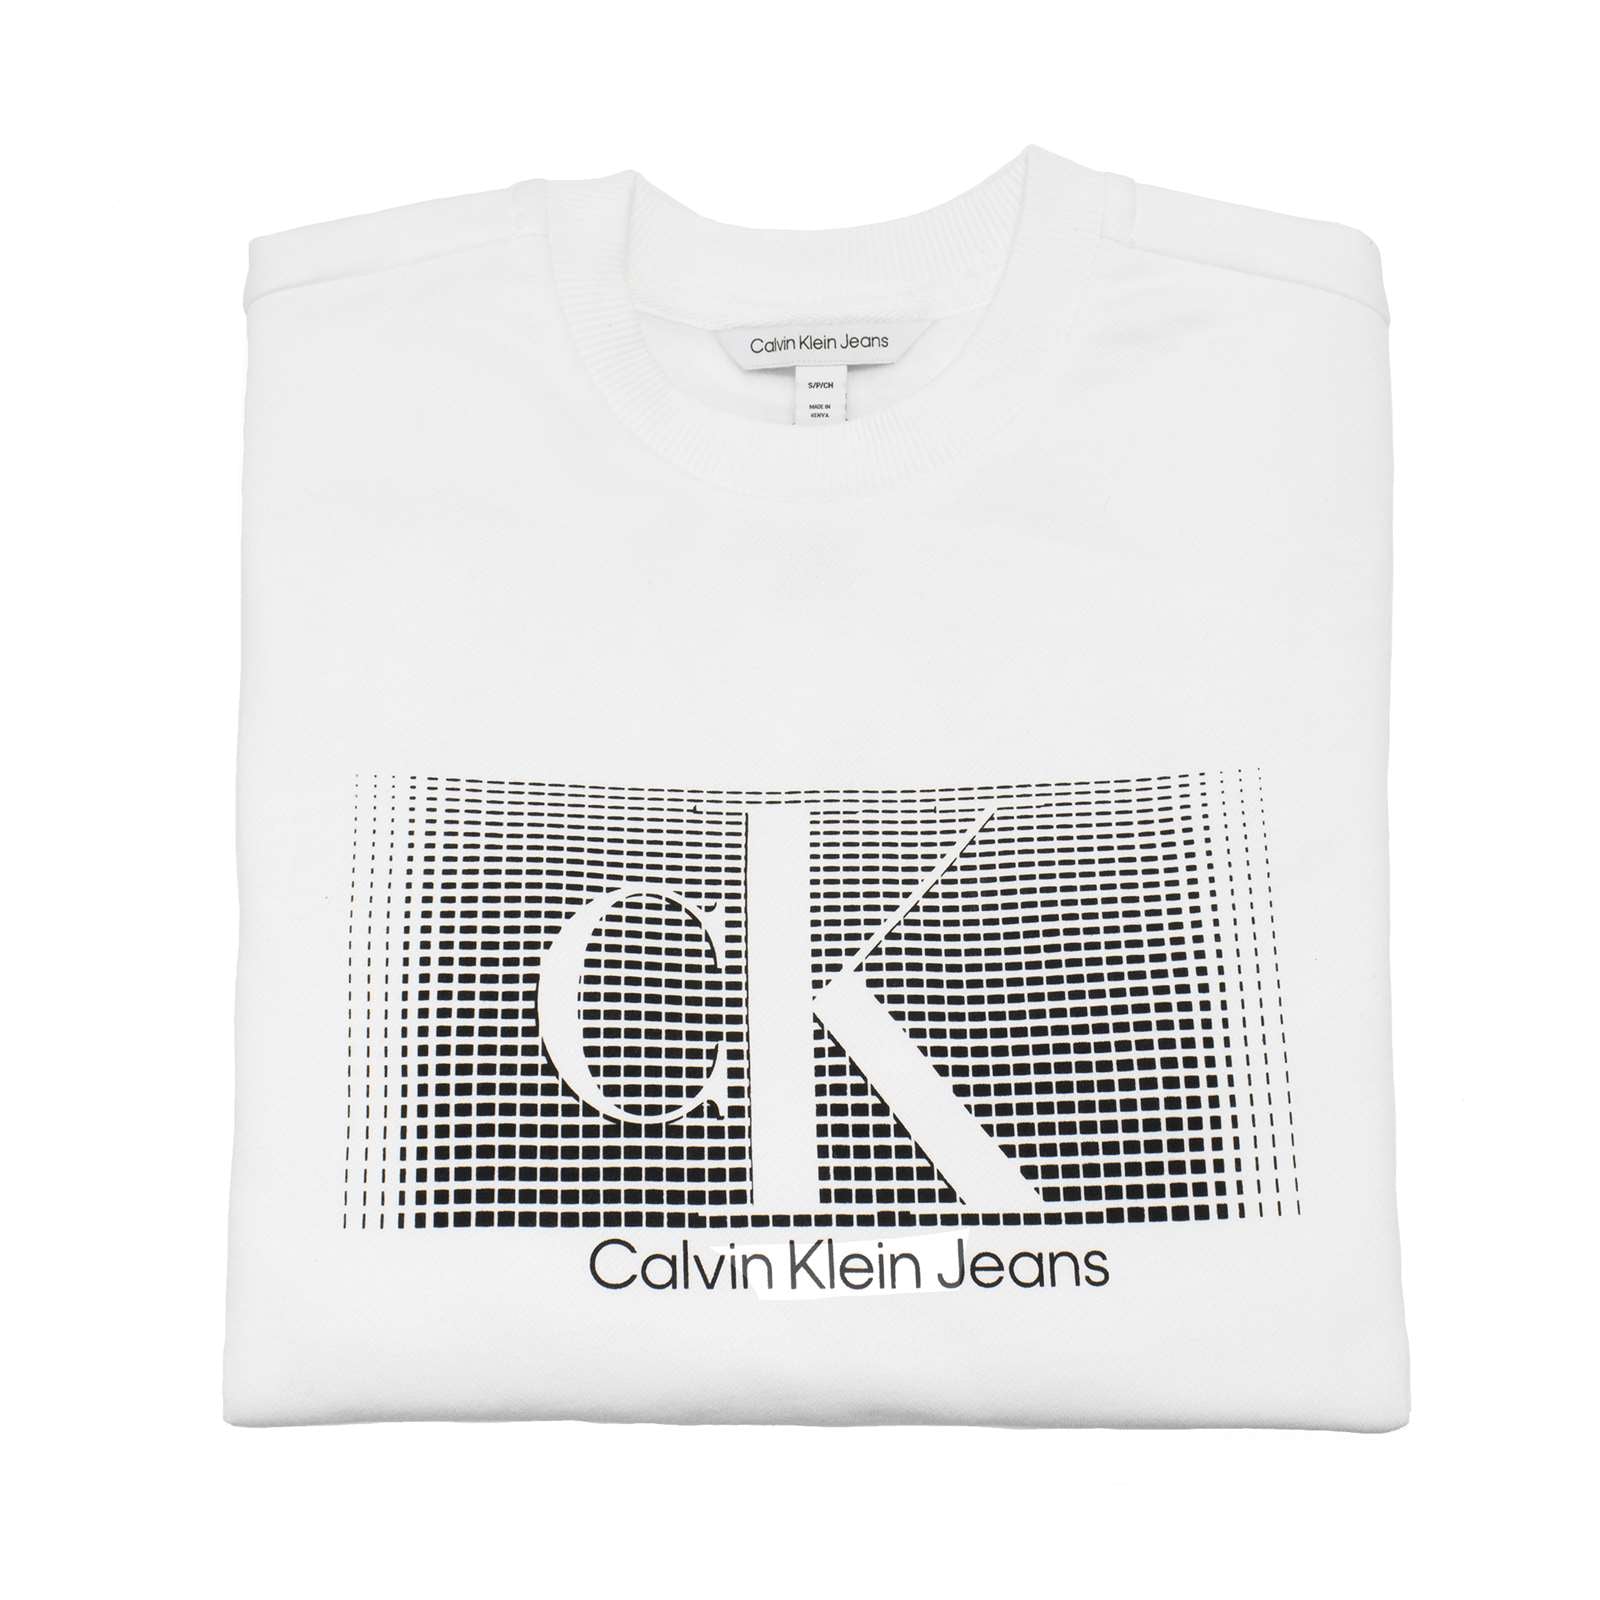 Calvin Klein Men Long Sleeve Monogram Crewneck Sweatshirt